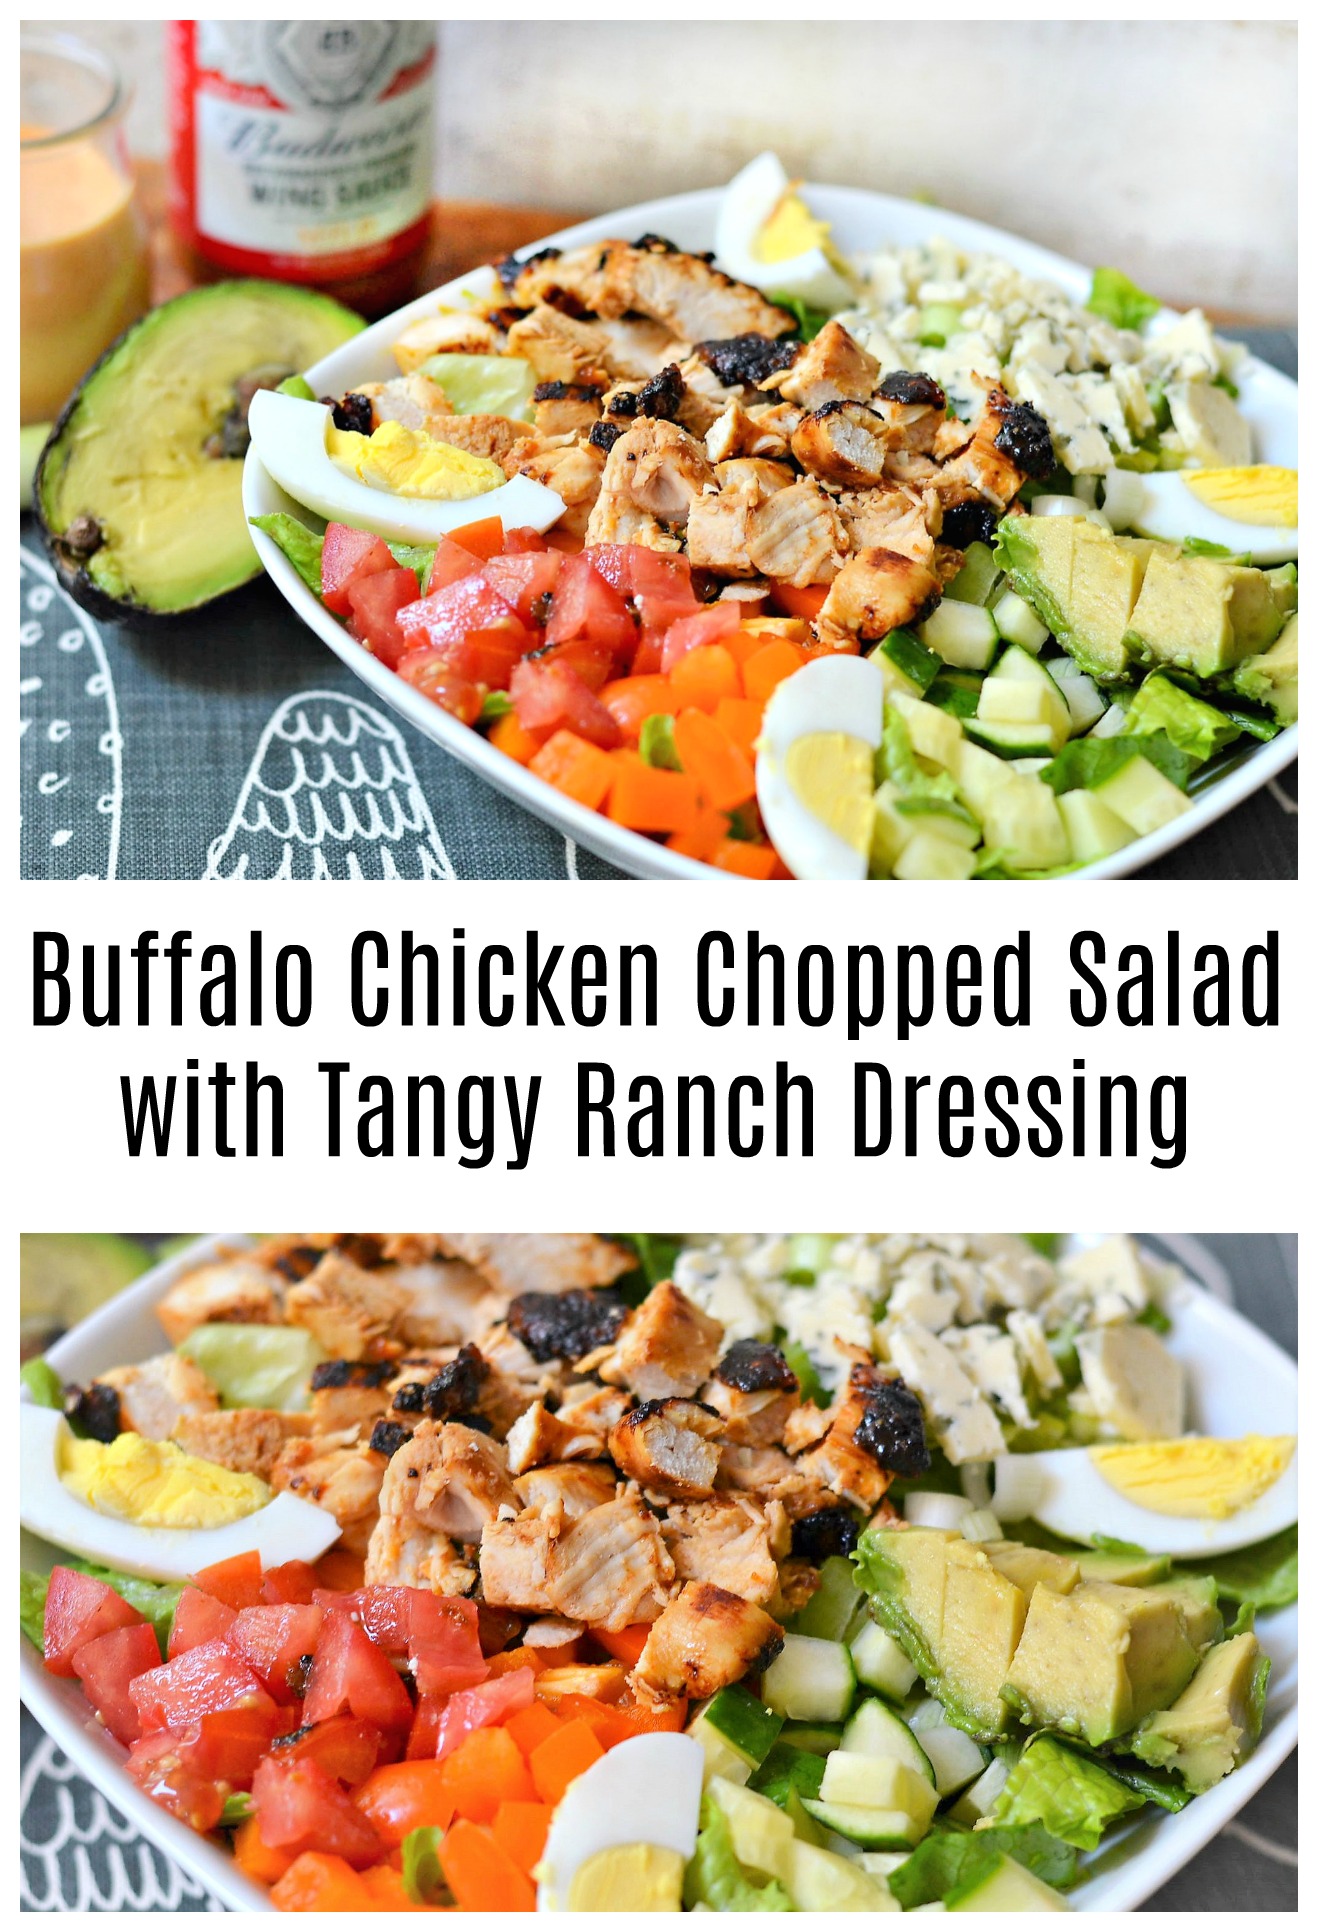 Buffalo Ranch Chopped Salad